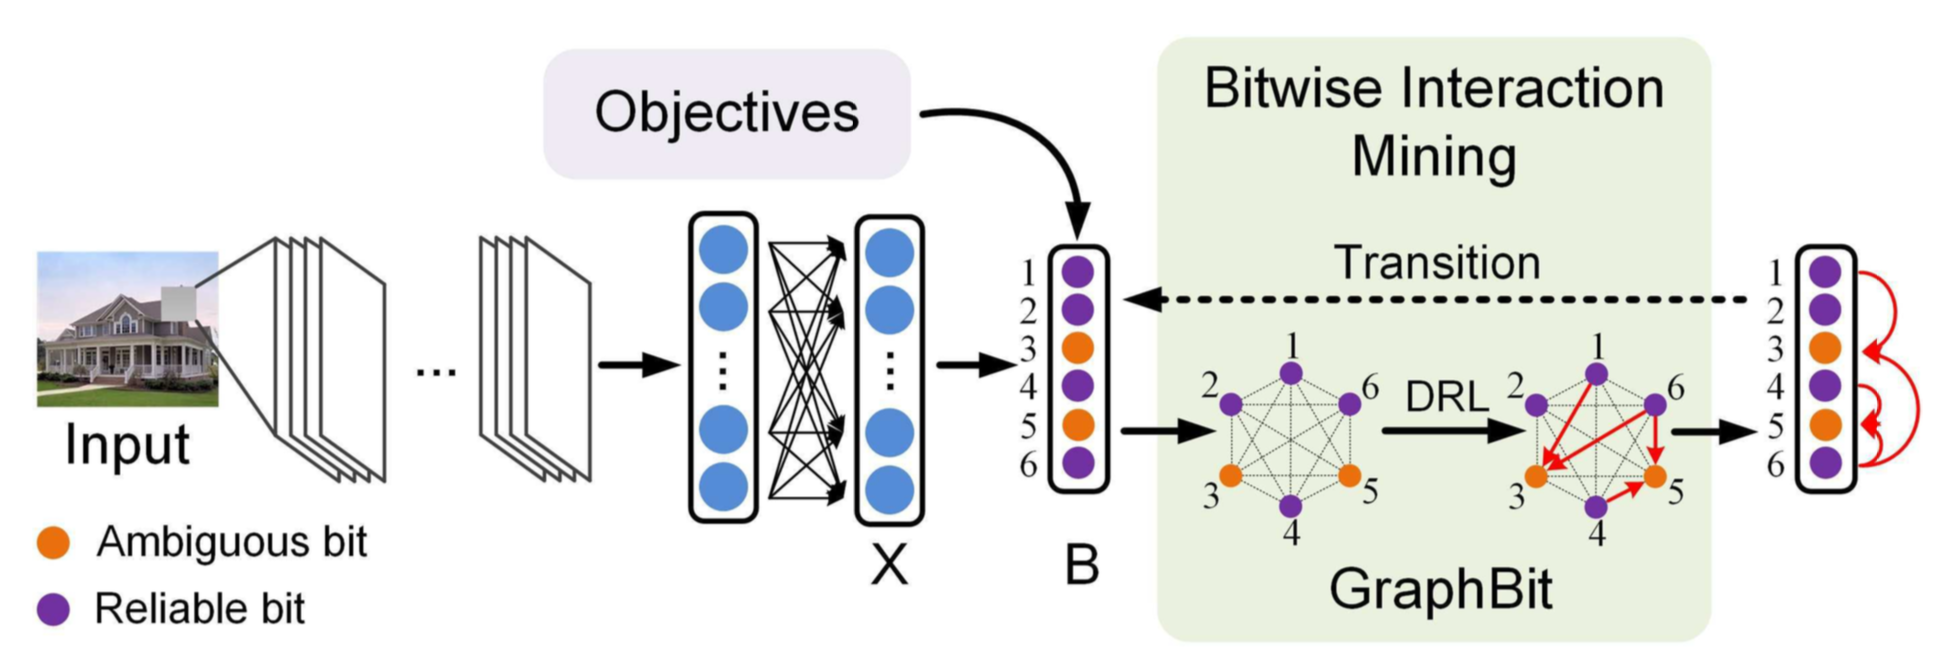 fukuhara-GraphBit-Bitwise-Interaction-Mining-via-Deep-Reinforcement-Learning.png